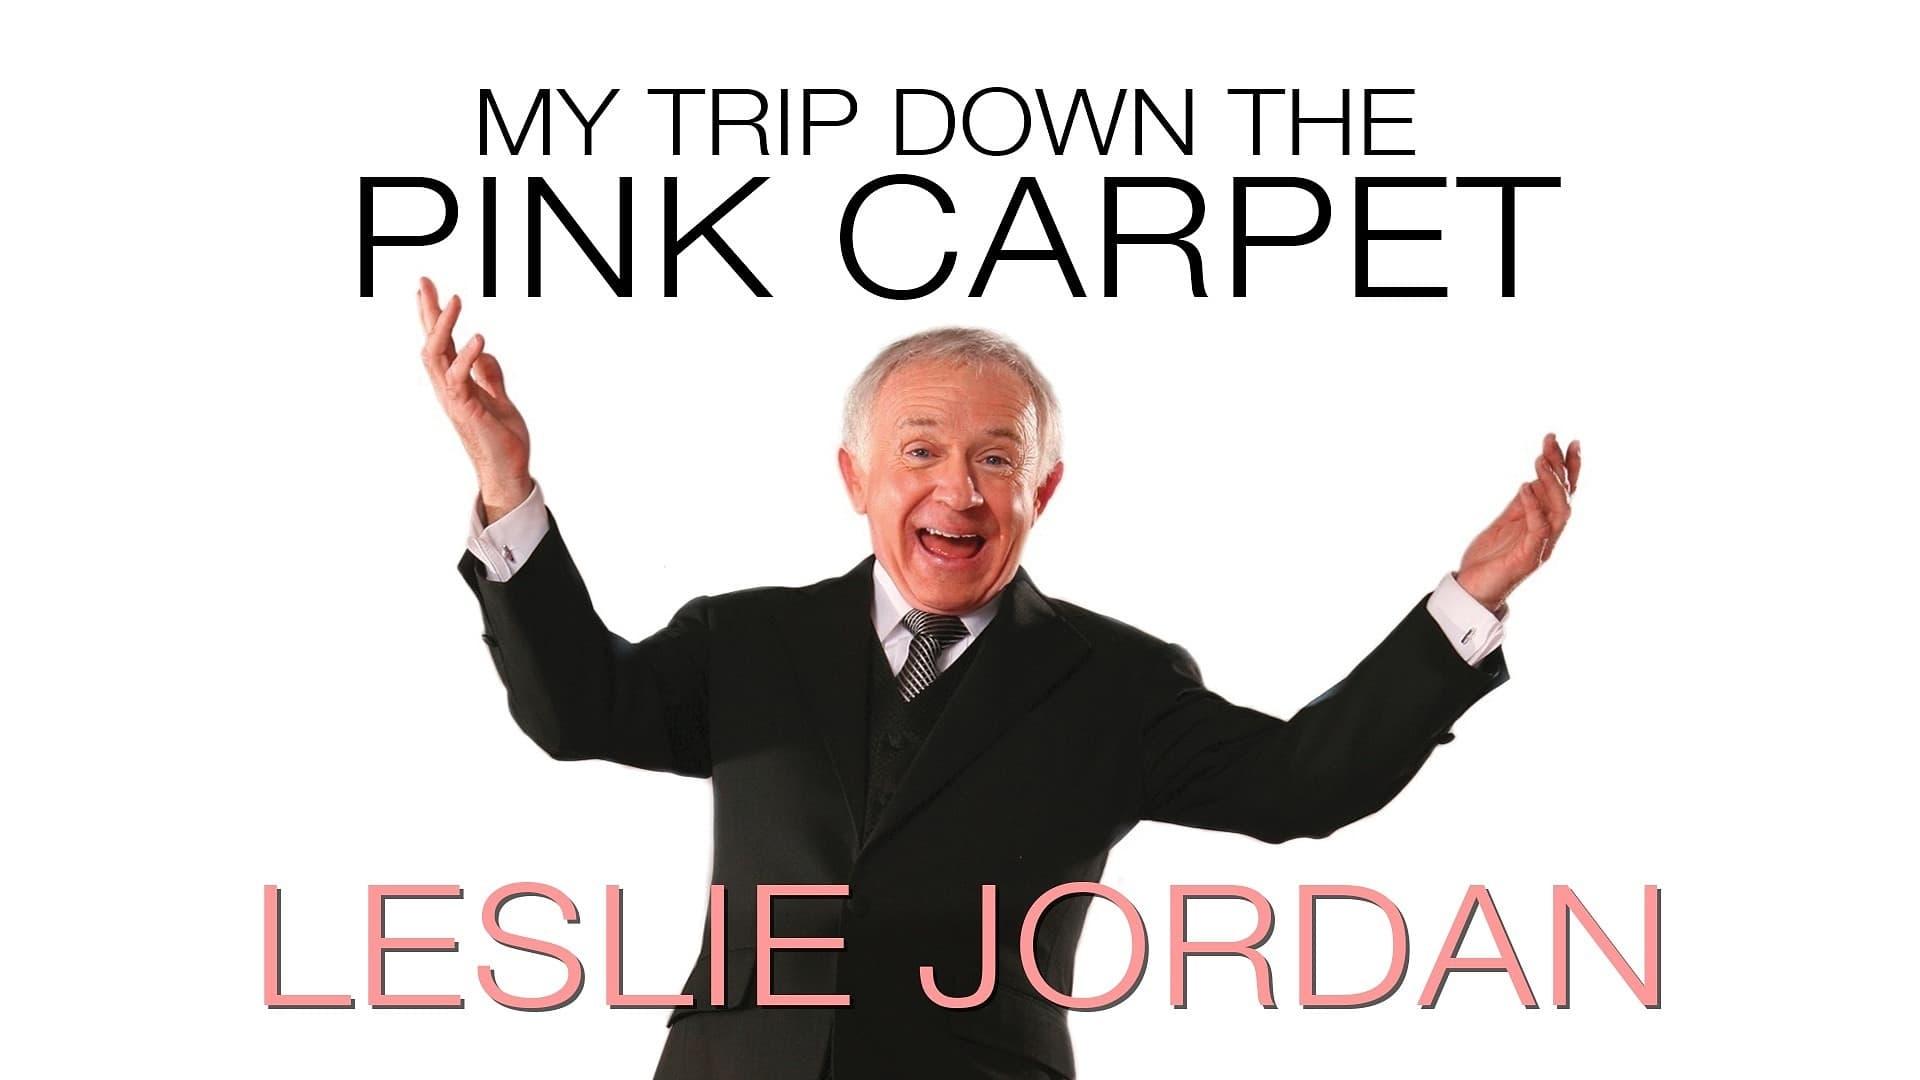 Leslie Jordan: My Trip Down the Pink Carpet backdrop